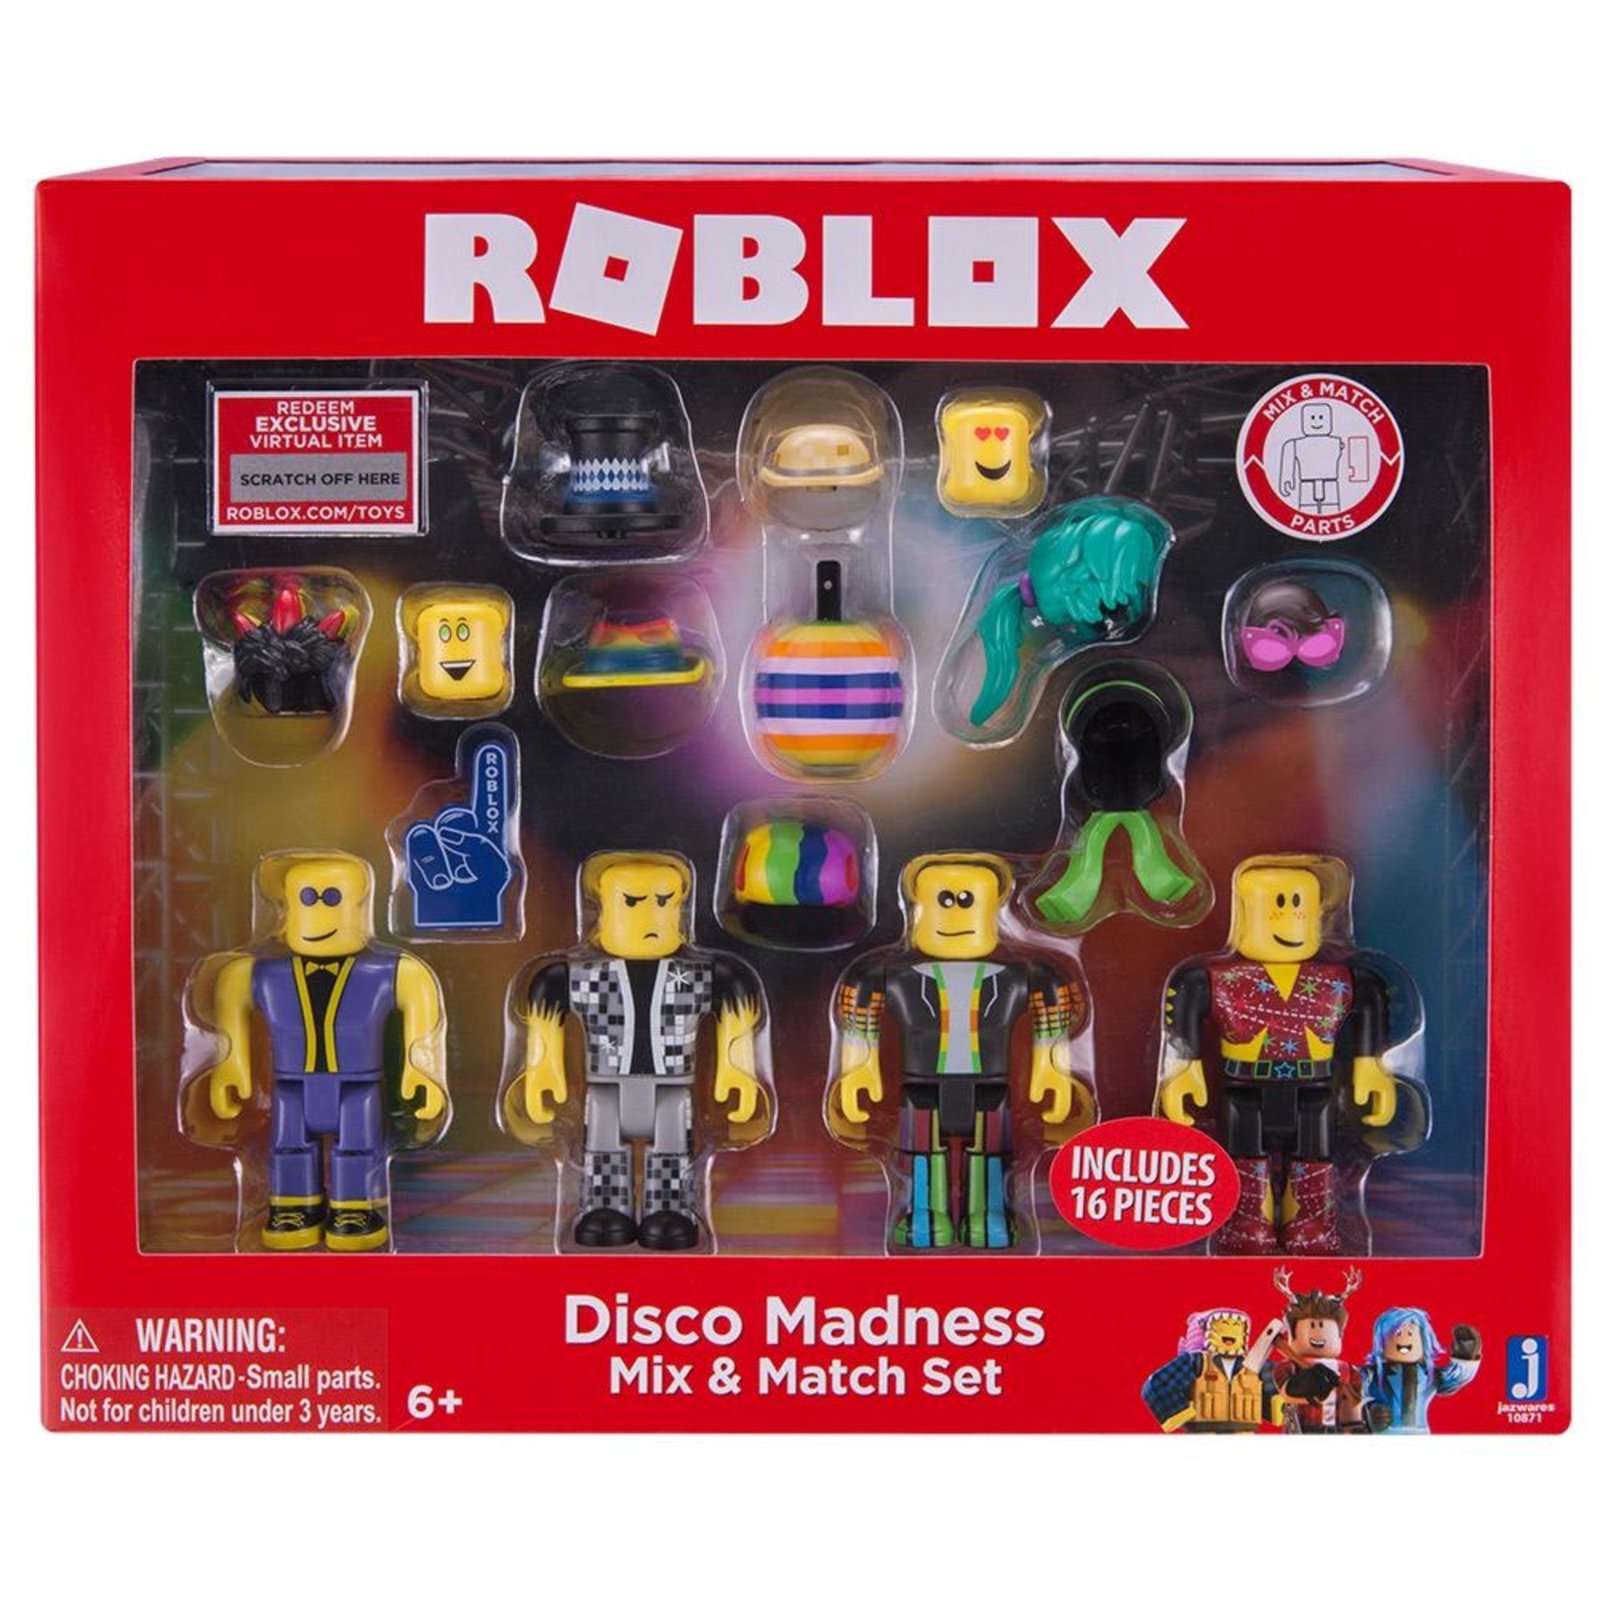 Roblox Colecionavel Mix Match Disco Madness Fun Divirta Se Compre Agora Dafiti Brasil - r colar roblox